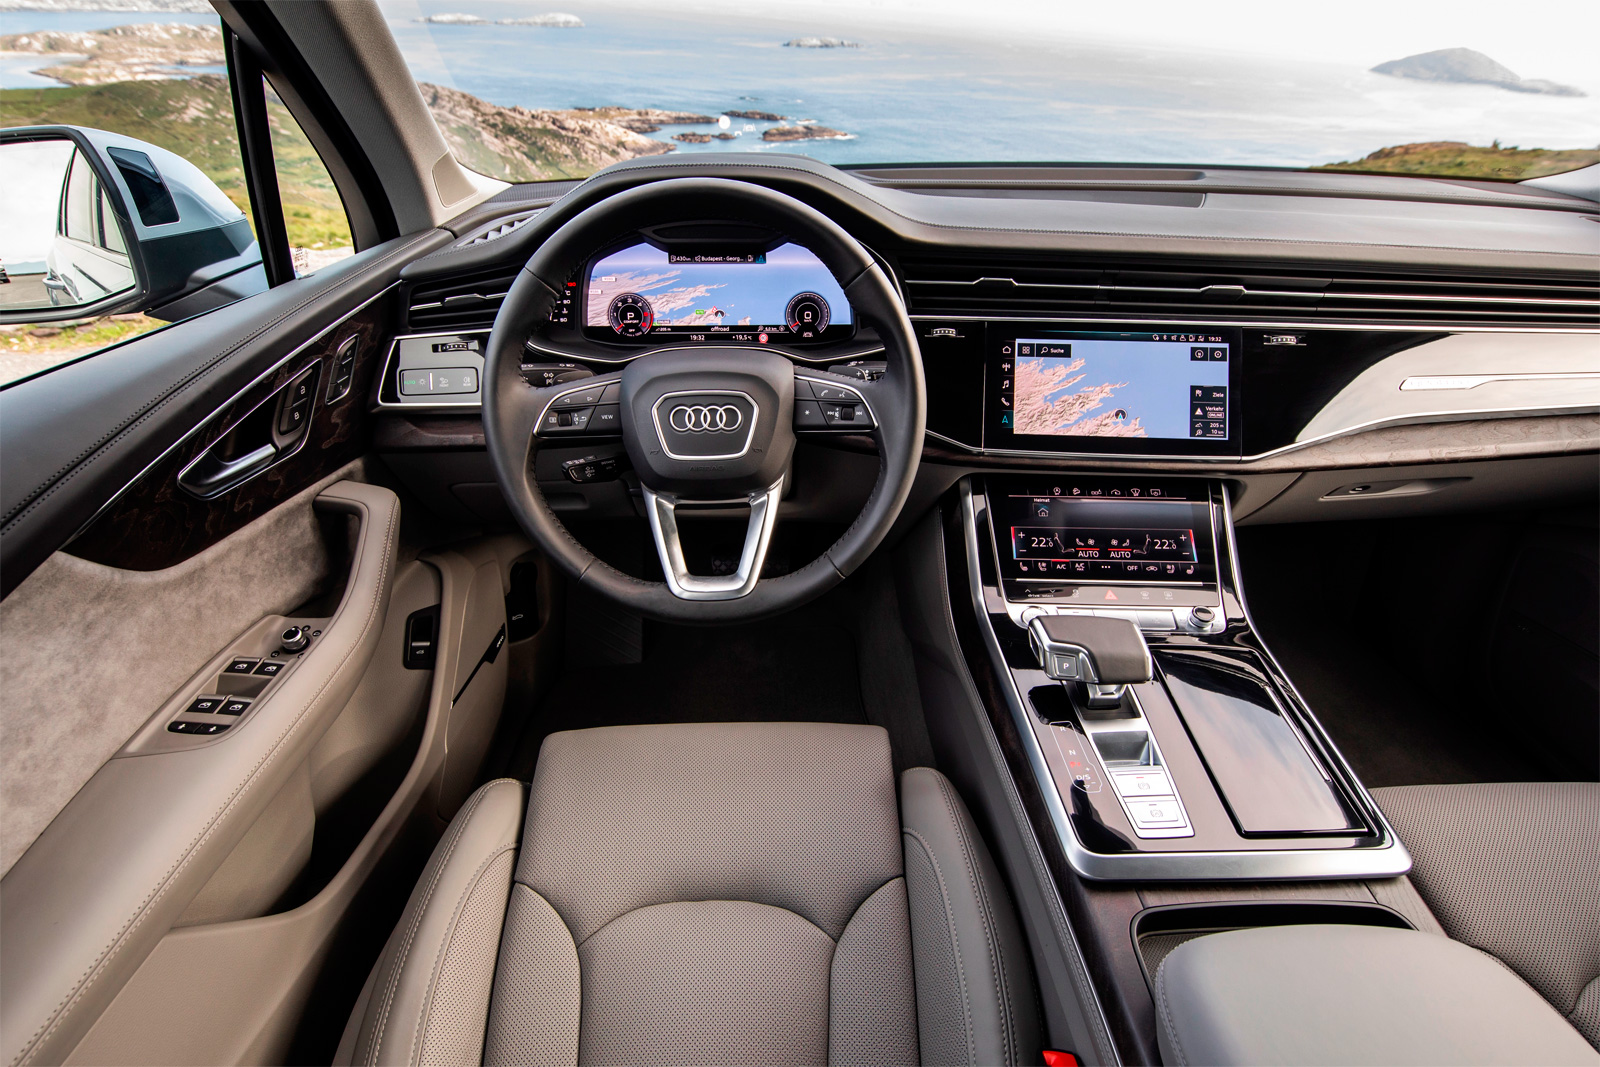 Audi Q7 (20192020) цена и характеристики, фотографии и обзор